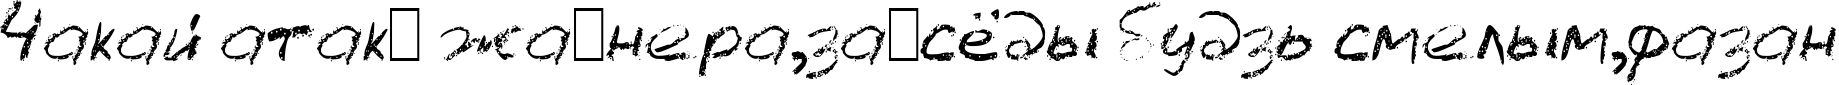 Пример написания шрифтом LC Chalk текста на белорусском